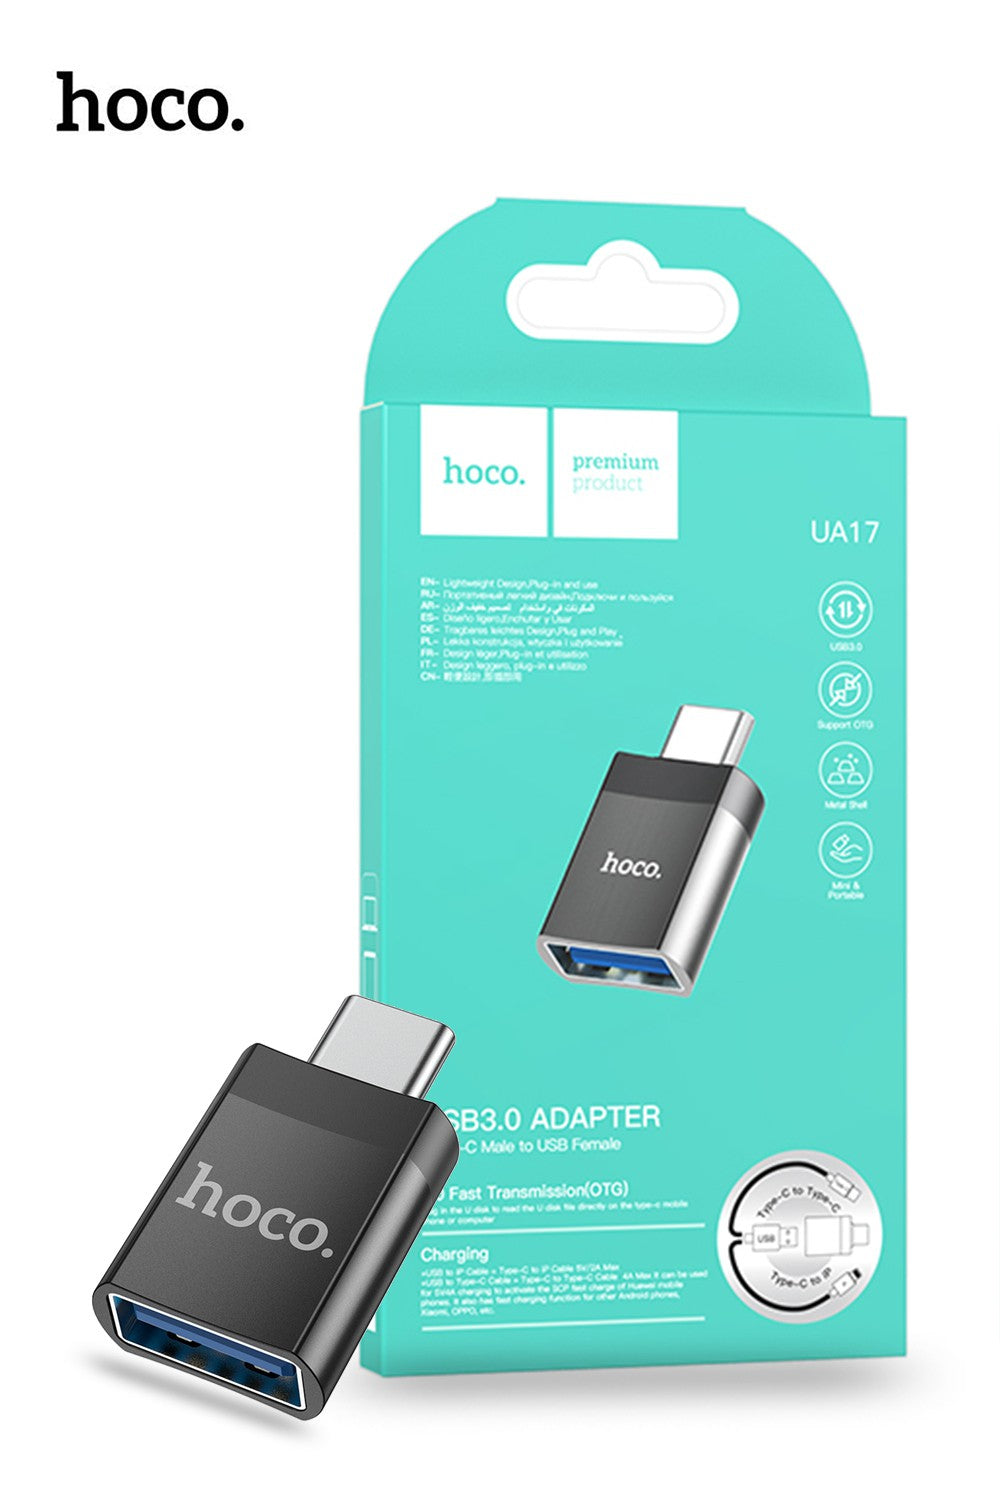 Hoco UA17 USB-C Male to USB-A Female OTG Adapter - Black